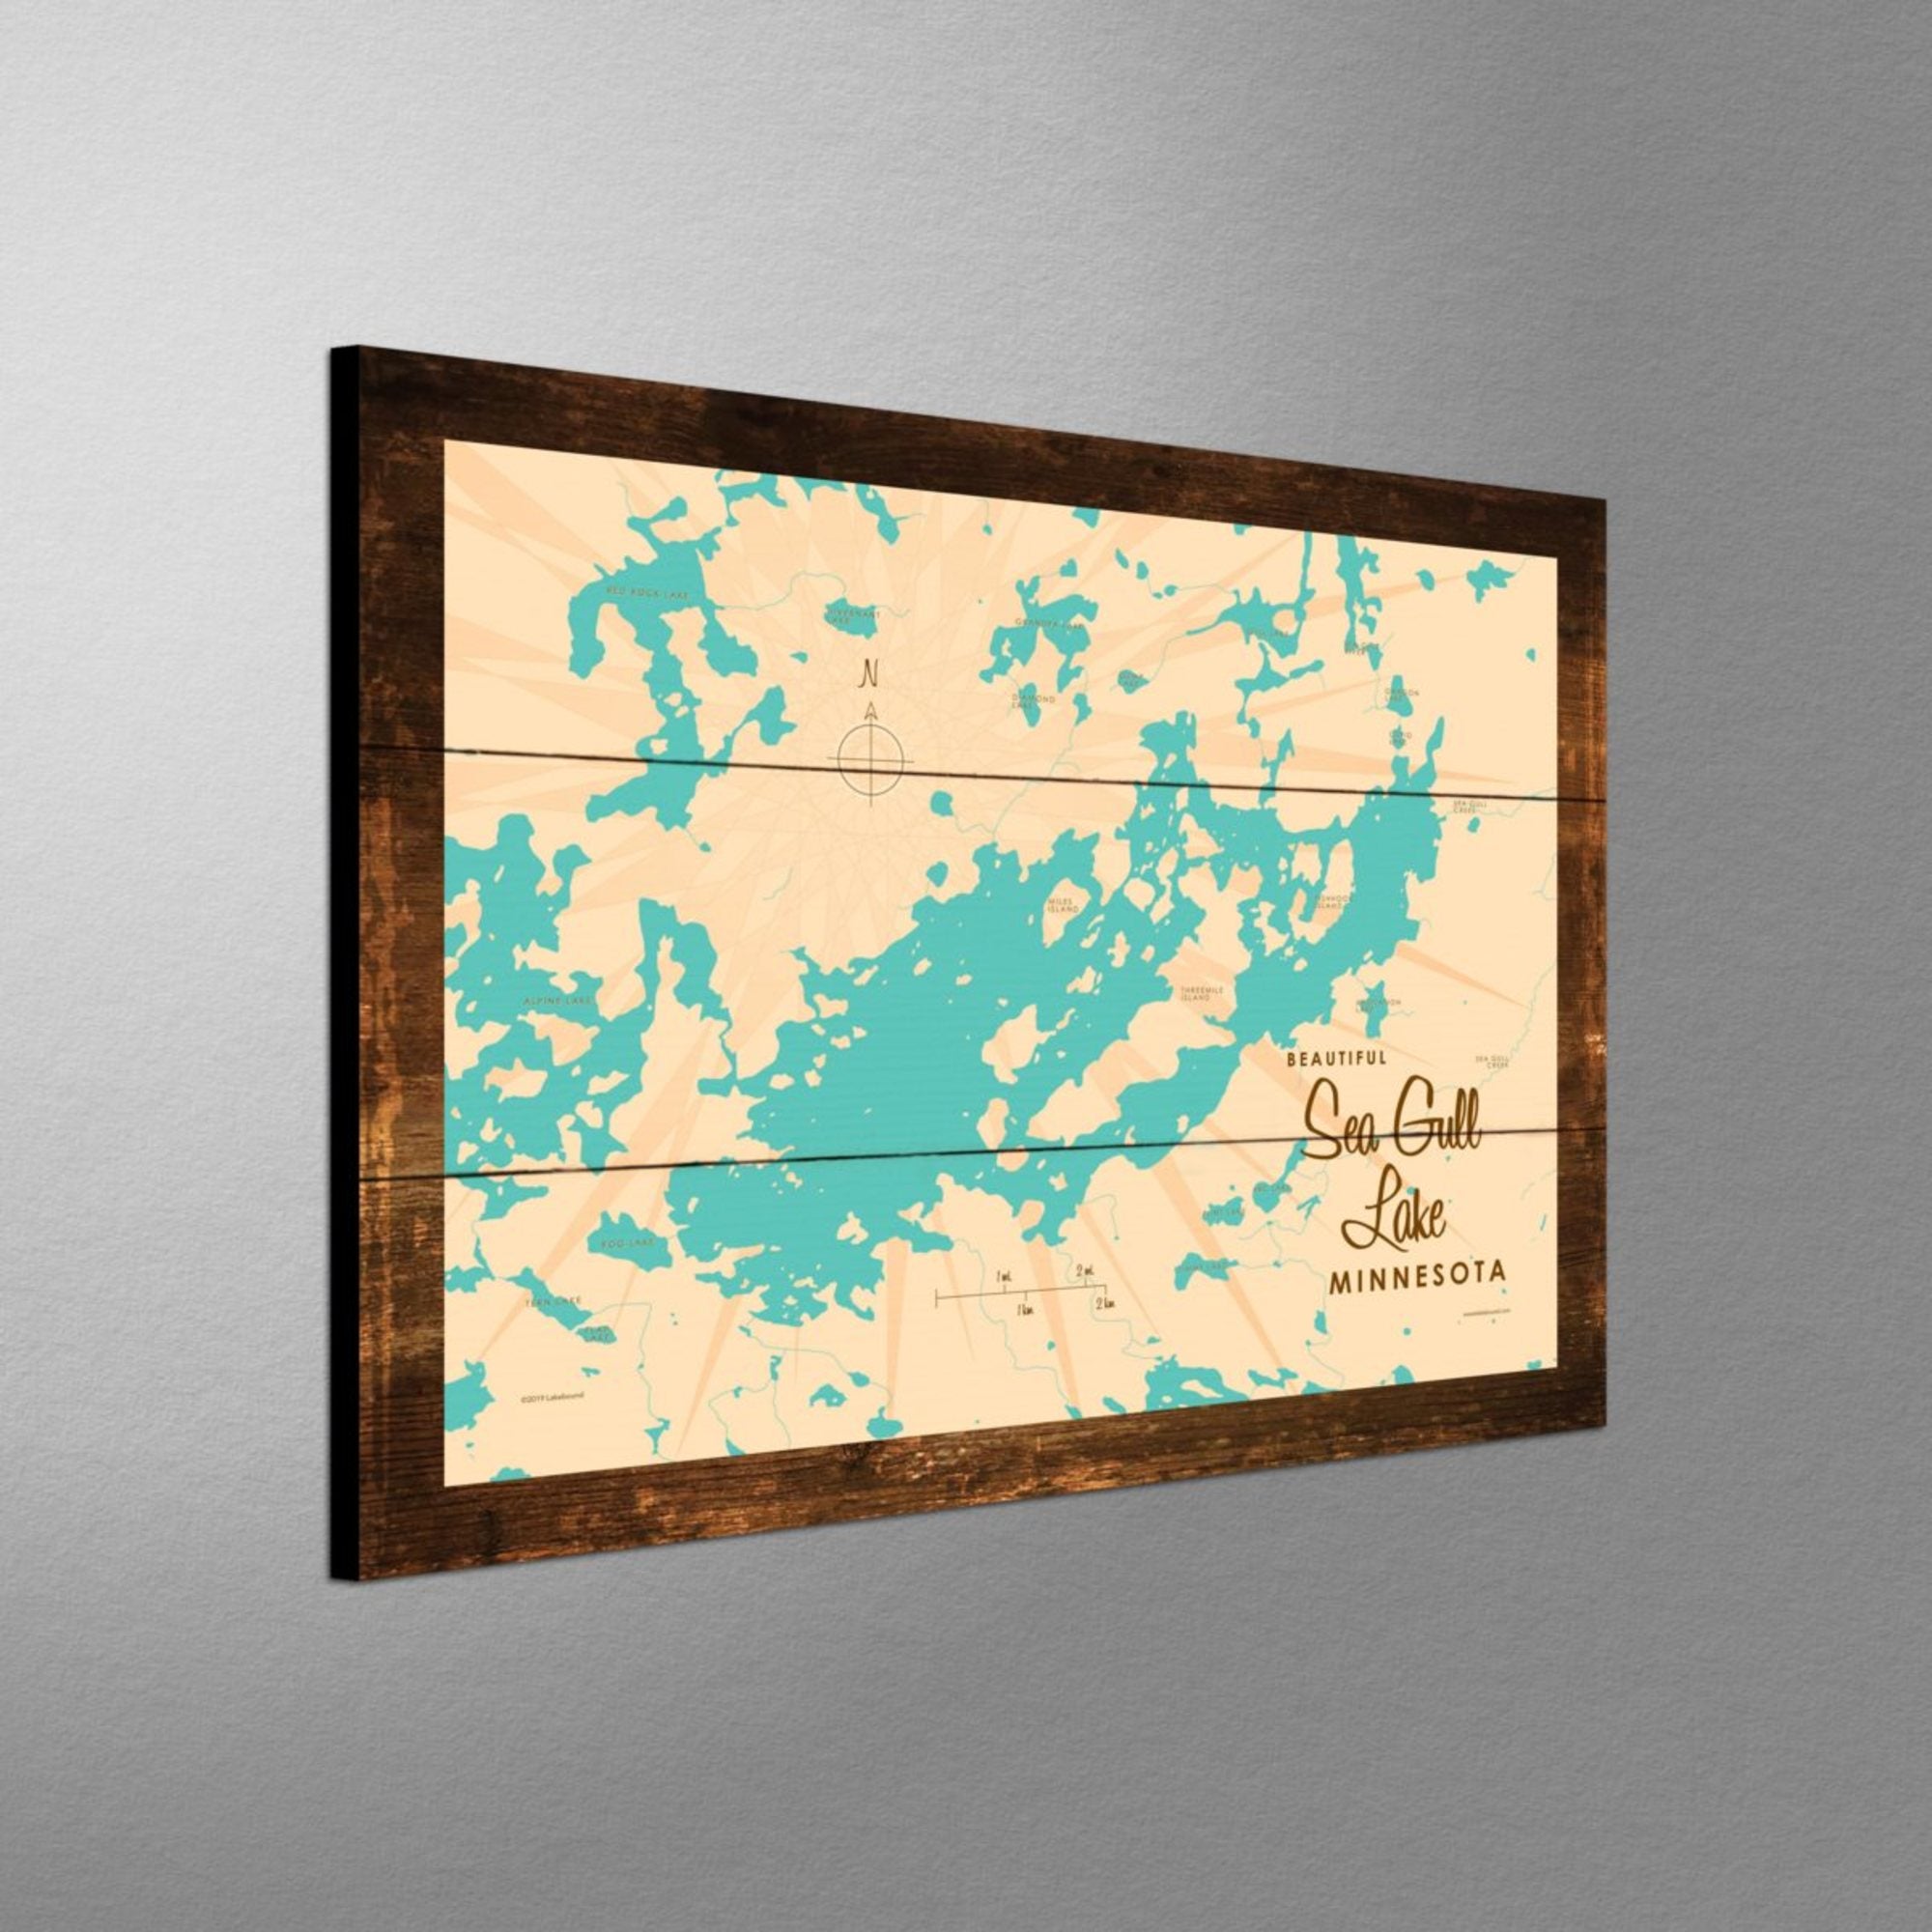 Sea Gull Lake Minnesota, Rustic Wood Sign Map Art